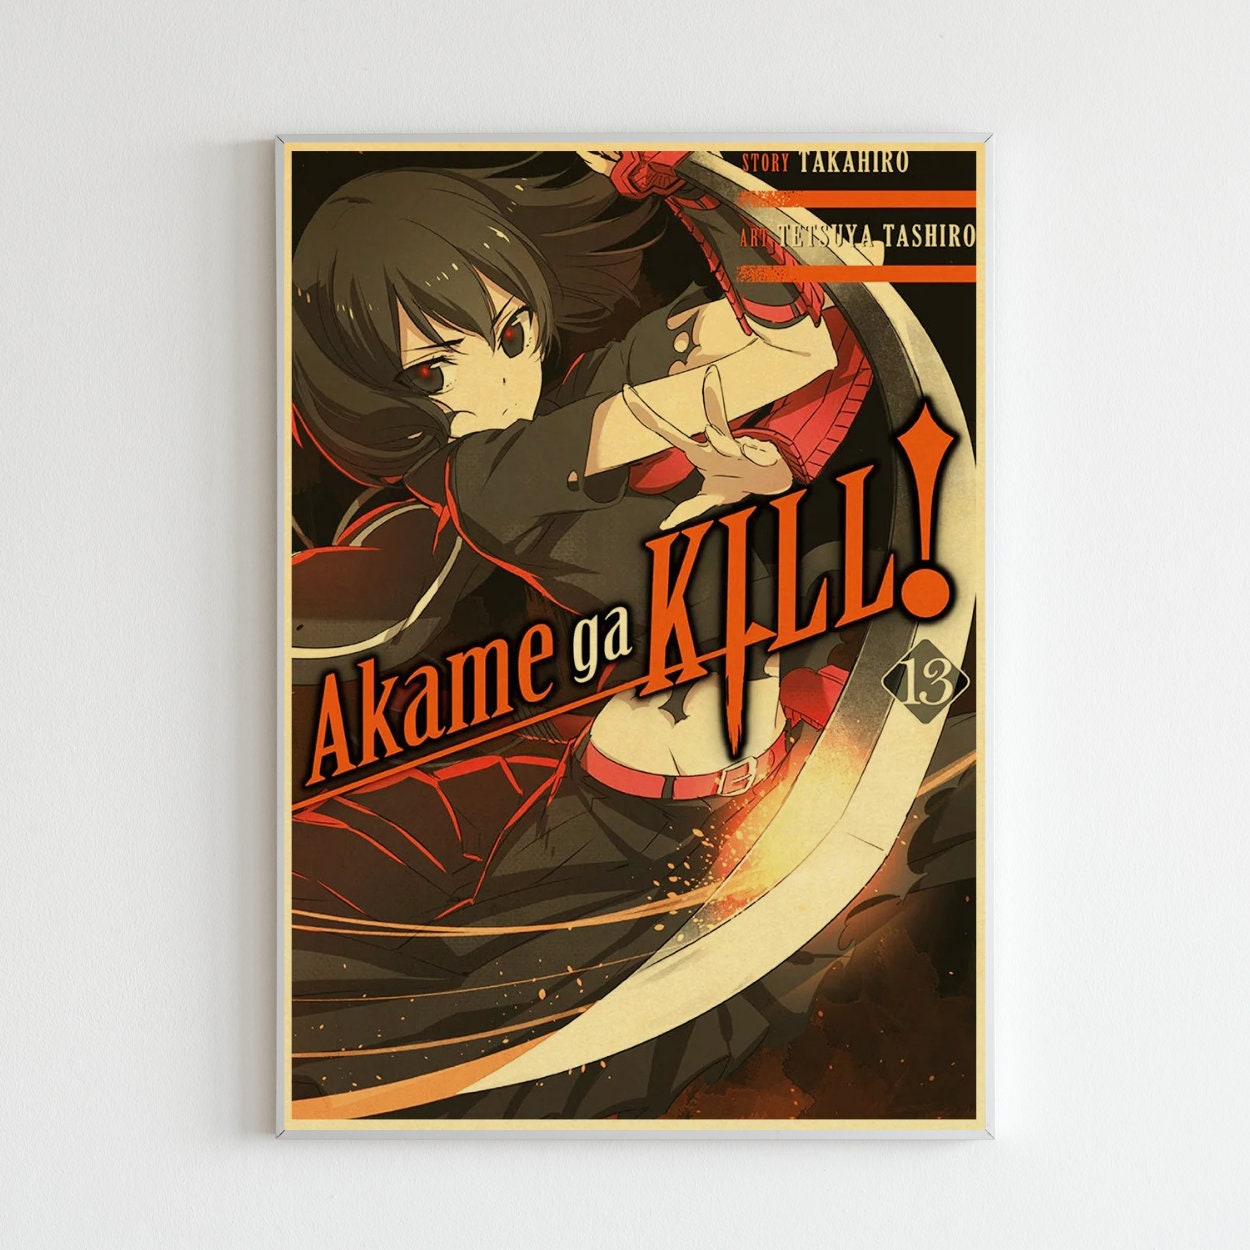 Tatsumi Akame ga Kill Akame ga Kiru Vintage Vector Anime Design Poster for  Sale by Raiden Designer Shop